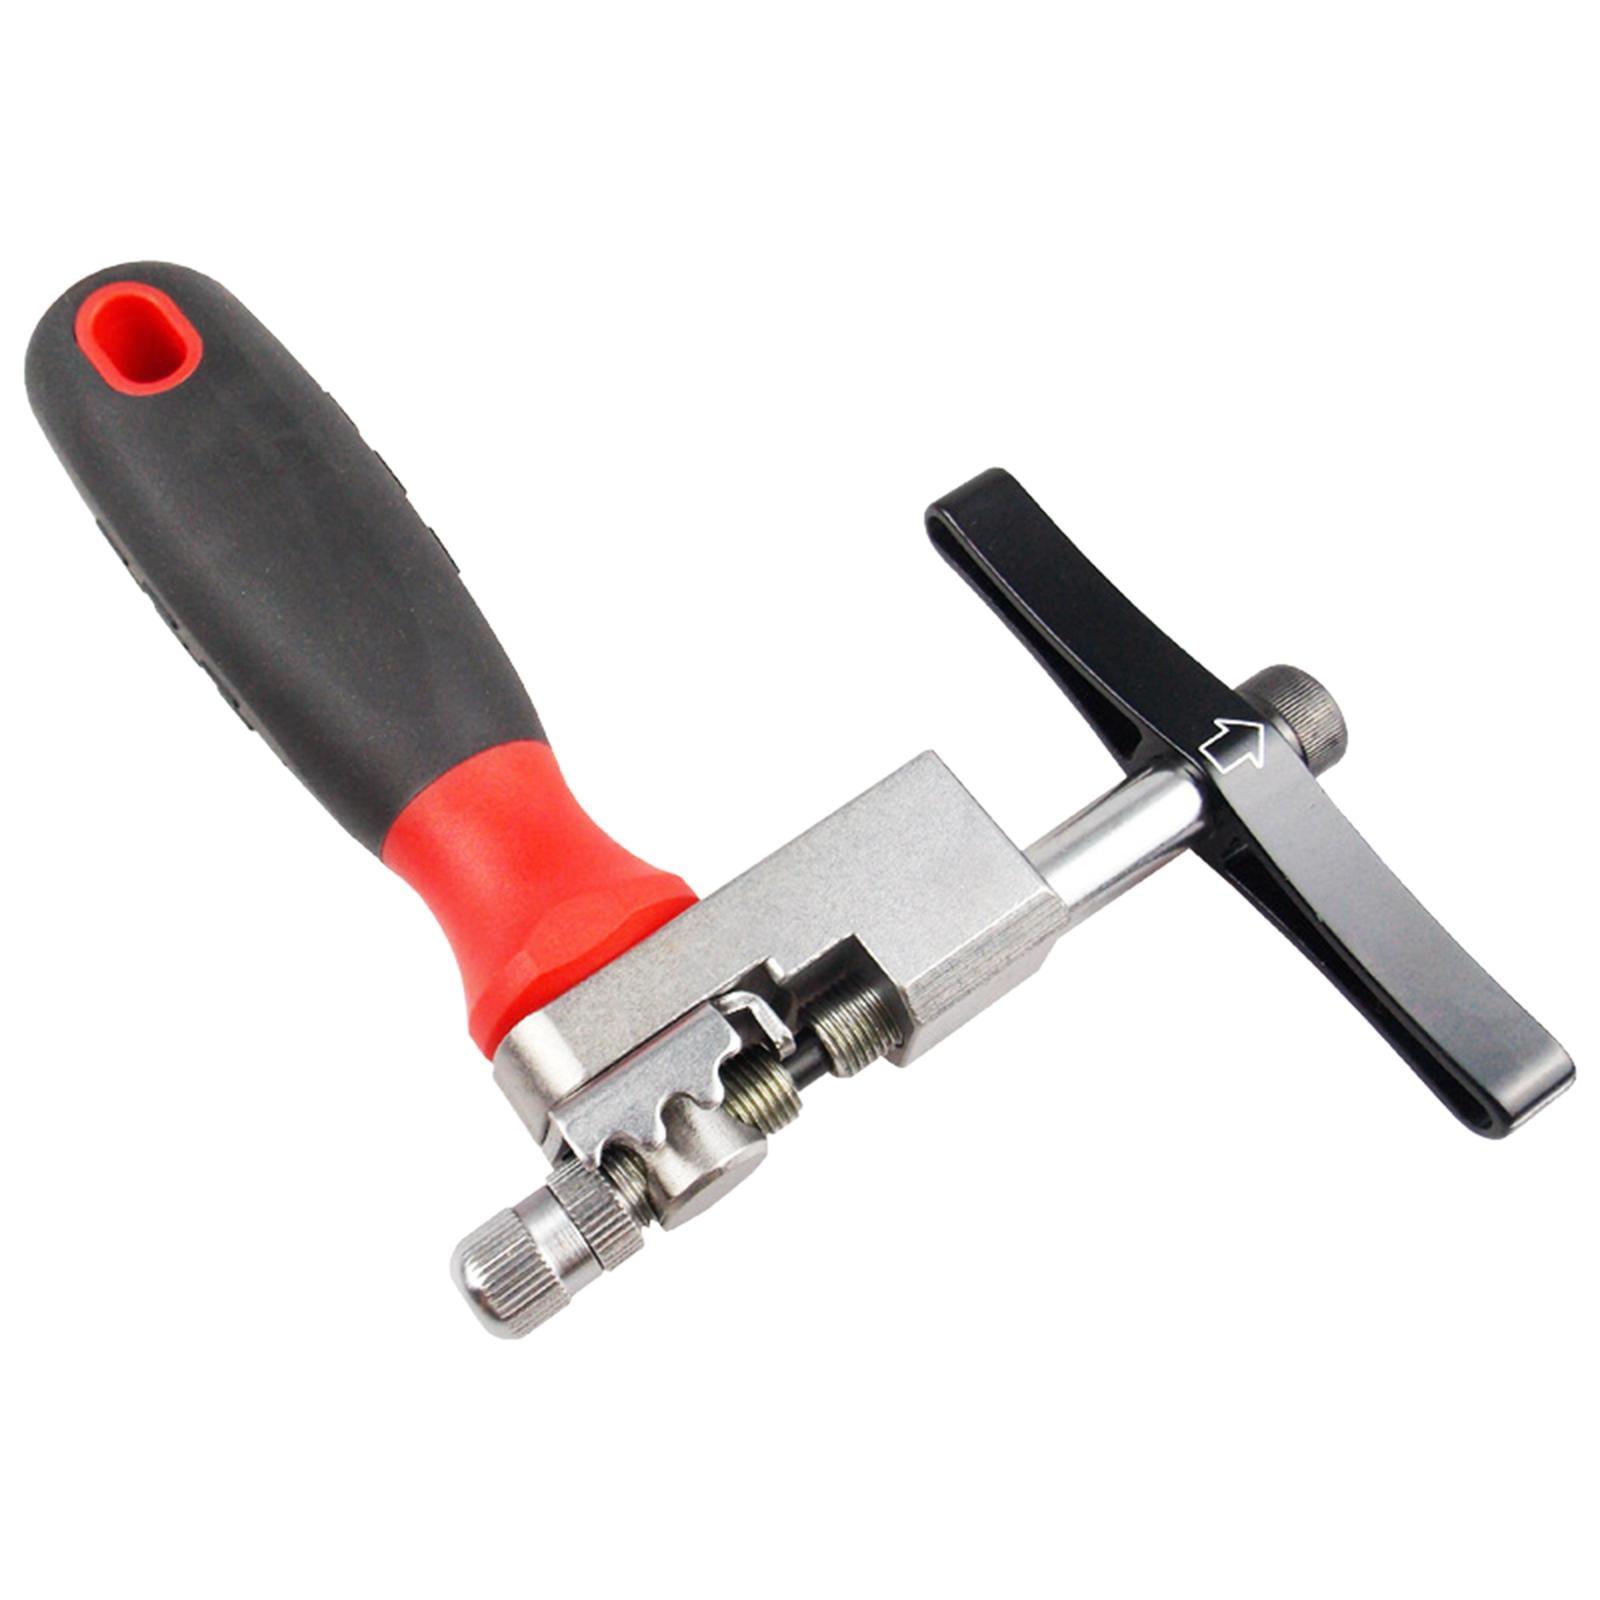 1PC Extractor Remover Tool Mountain Bike Chain Splitter Breaker Link Pin K2R8 